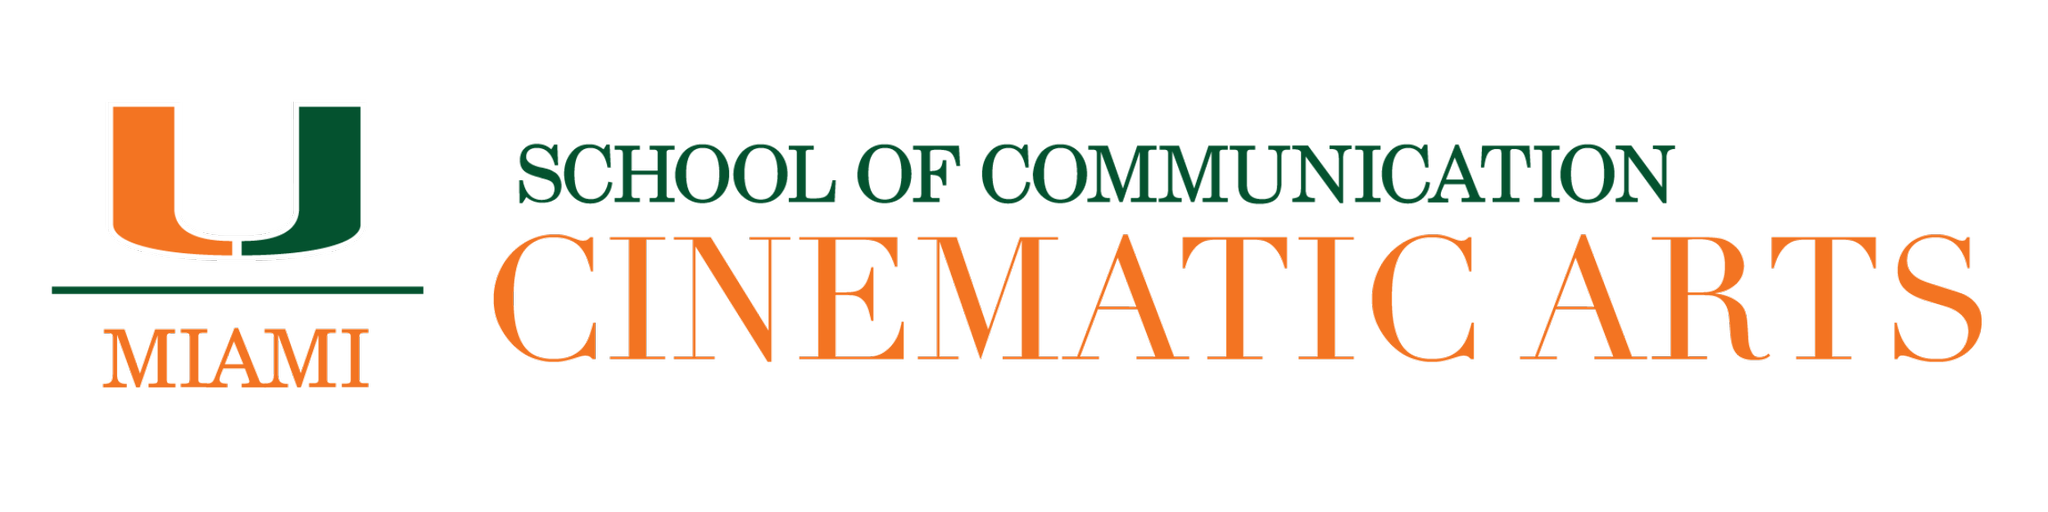 University of Miami School of Communications Cinematic Arts logo in green and orange